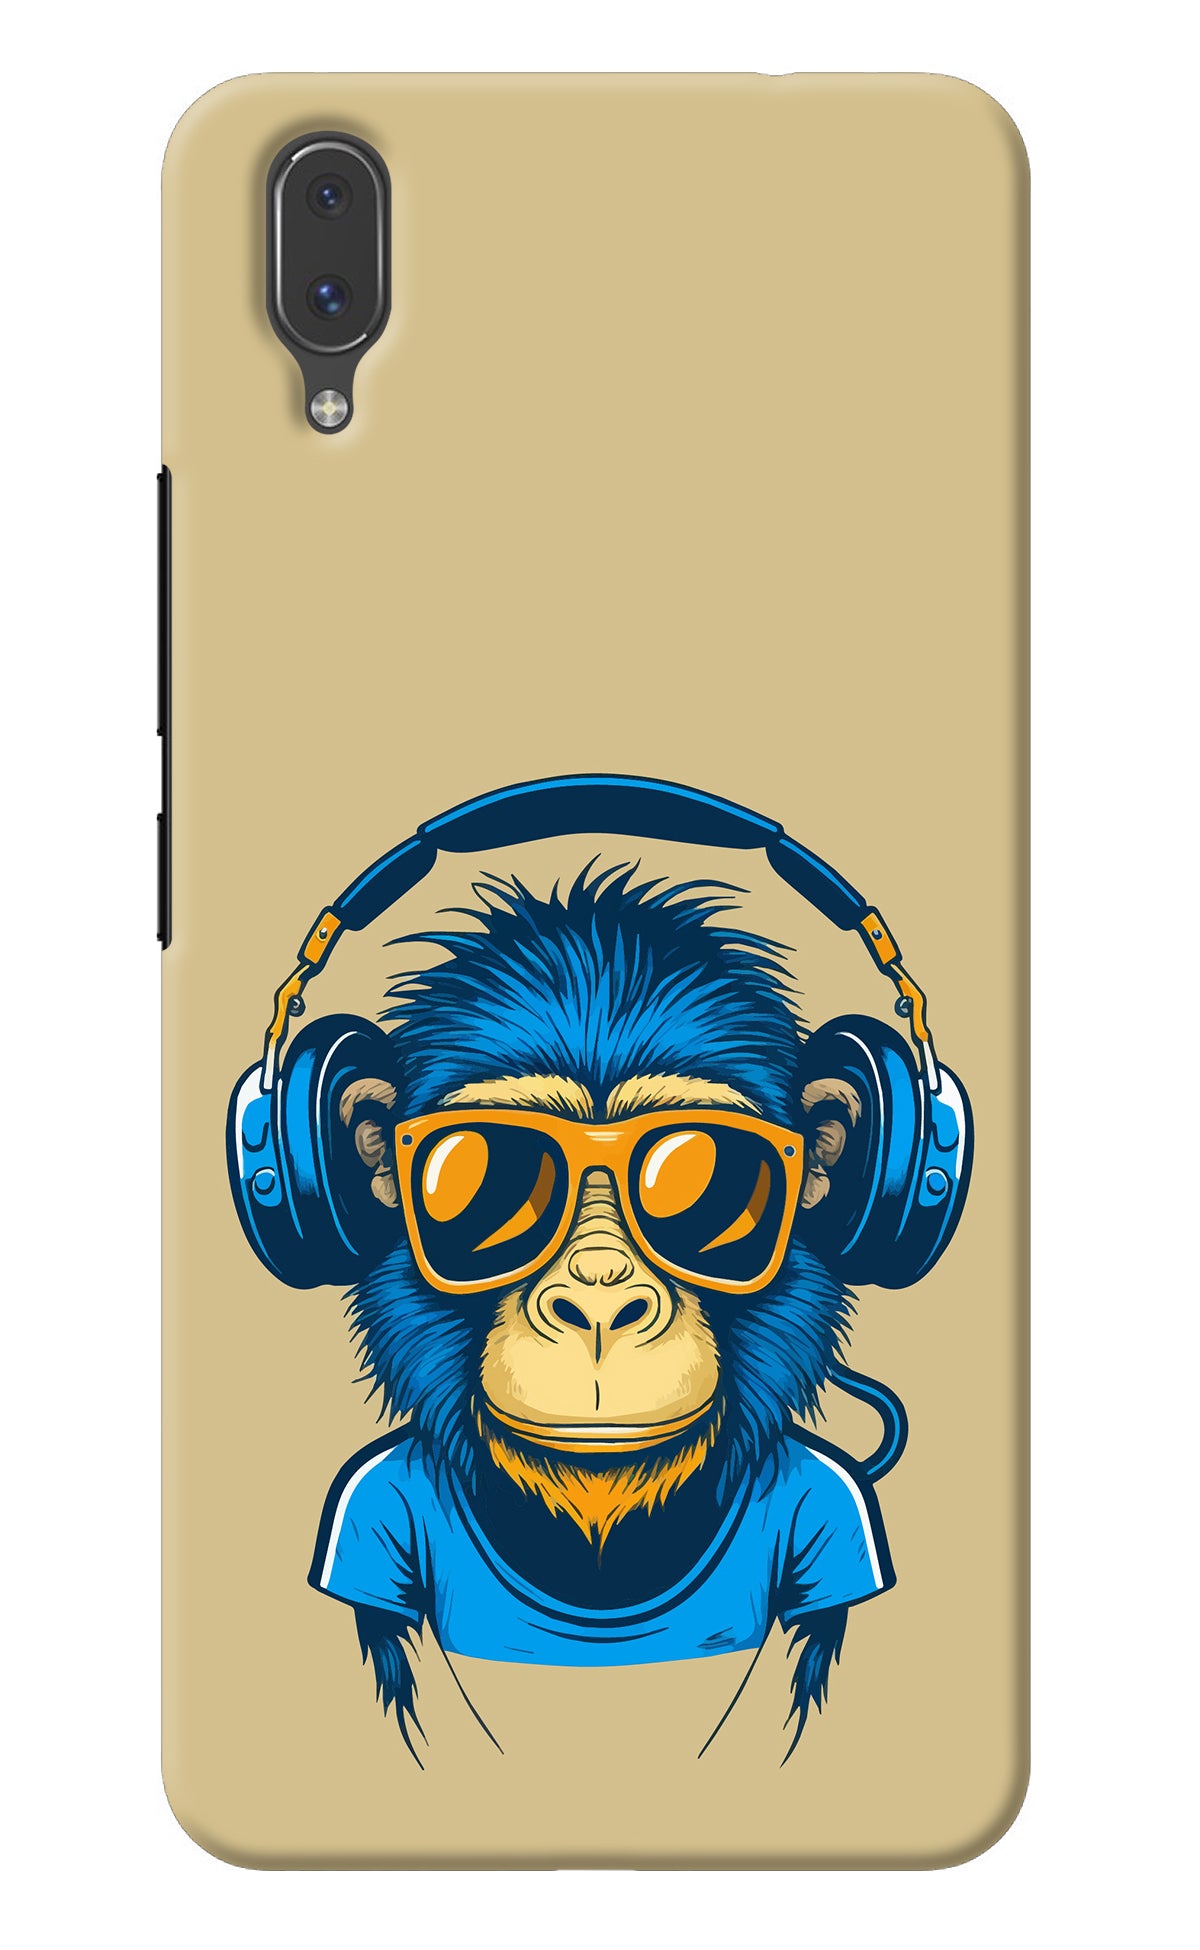 Monkey Headphone Vivo X21 Back Cover